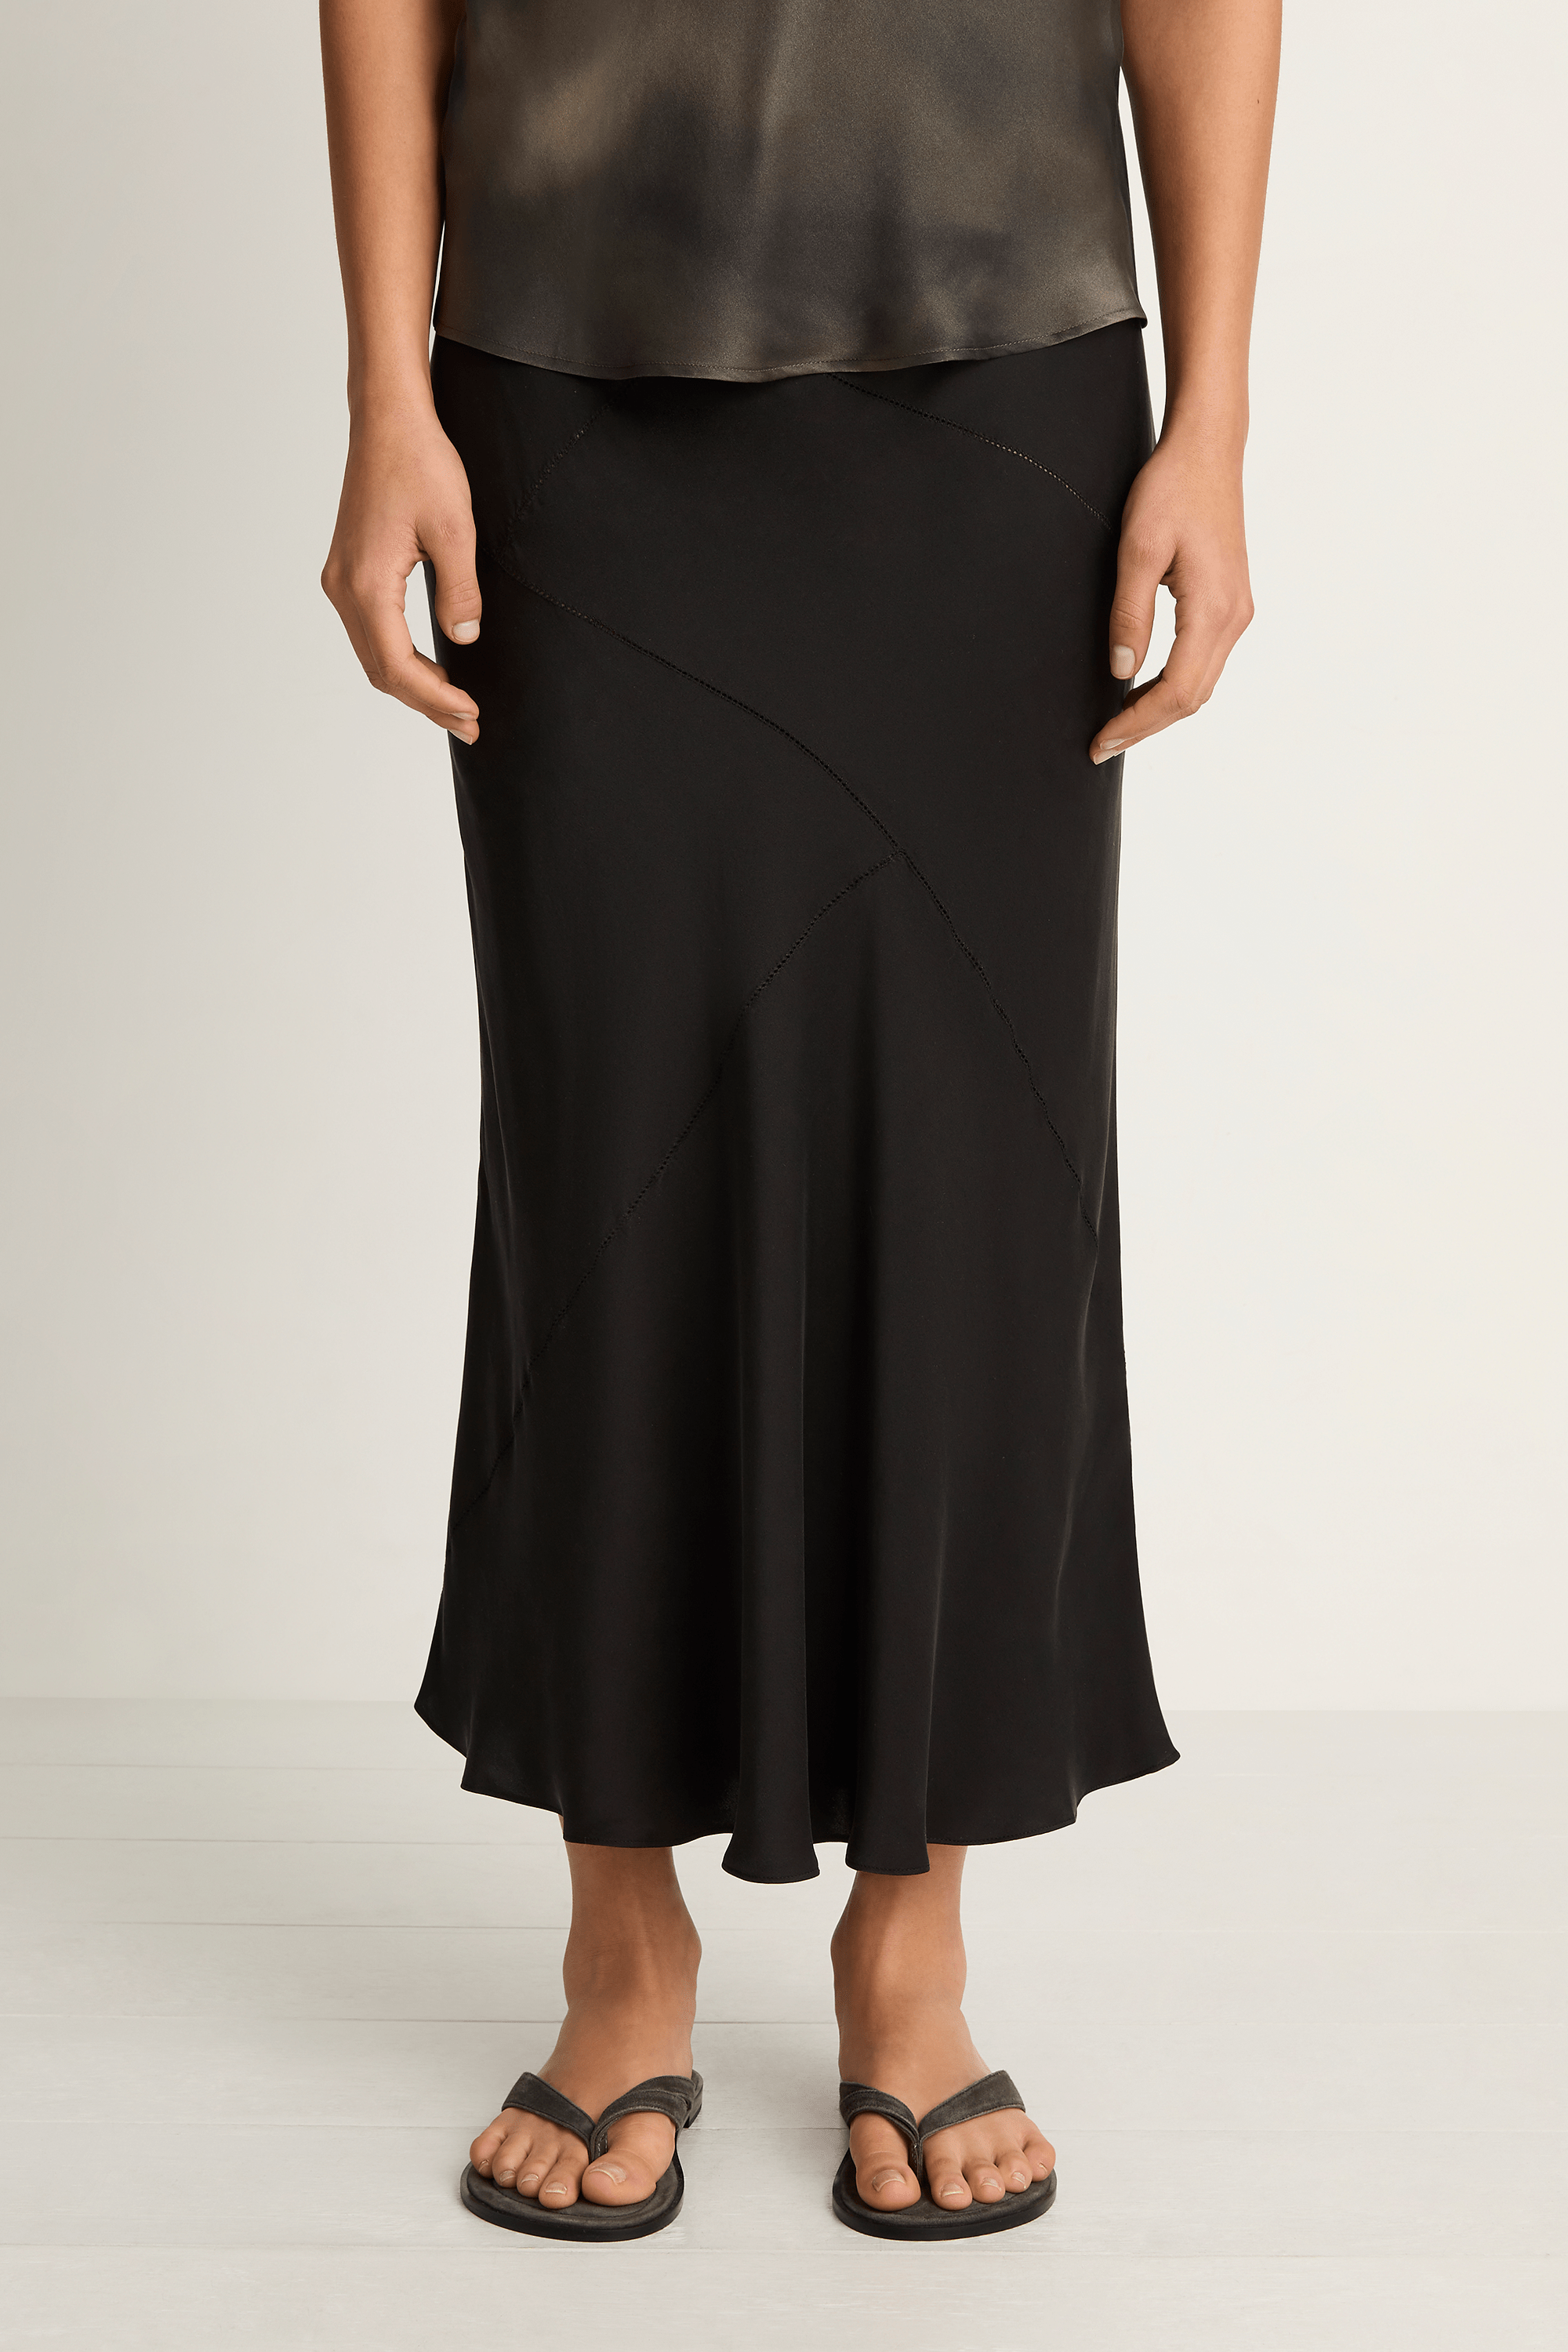 Silk Laundry Splice Long Bias Cut Skirt - Black